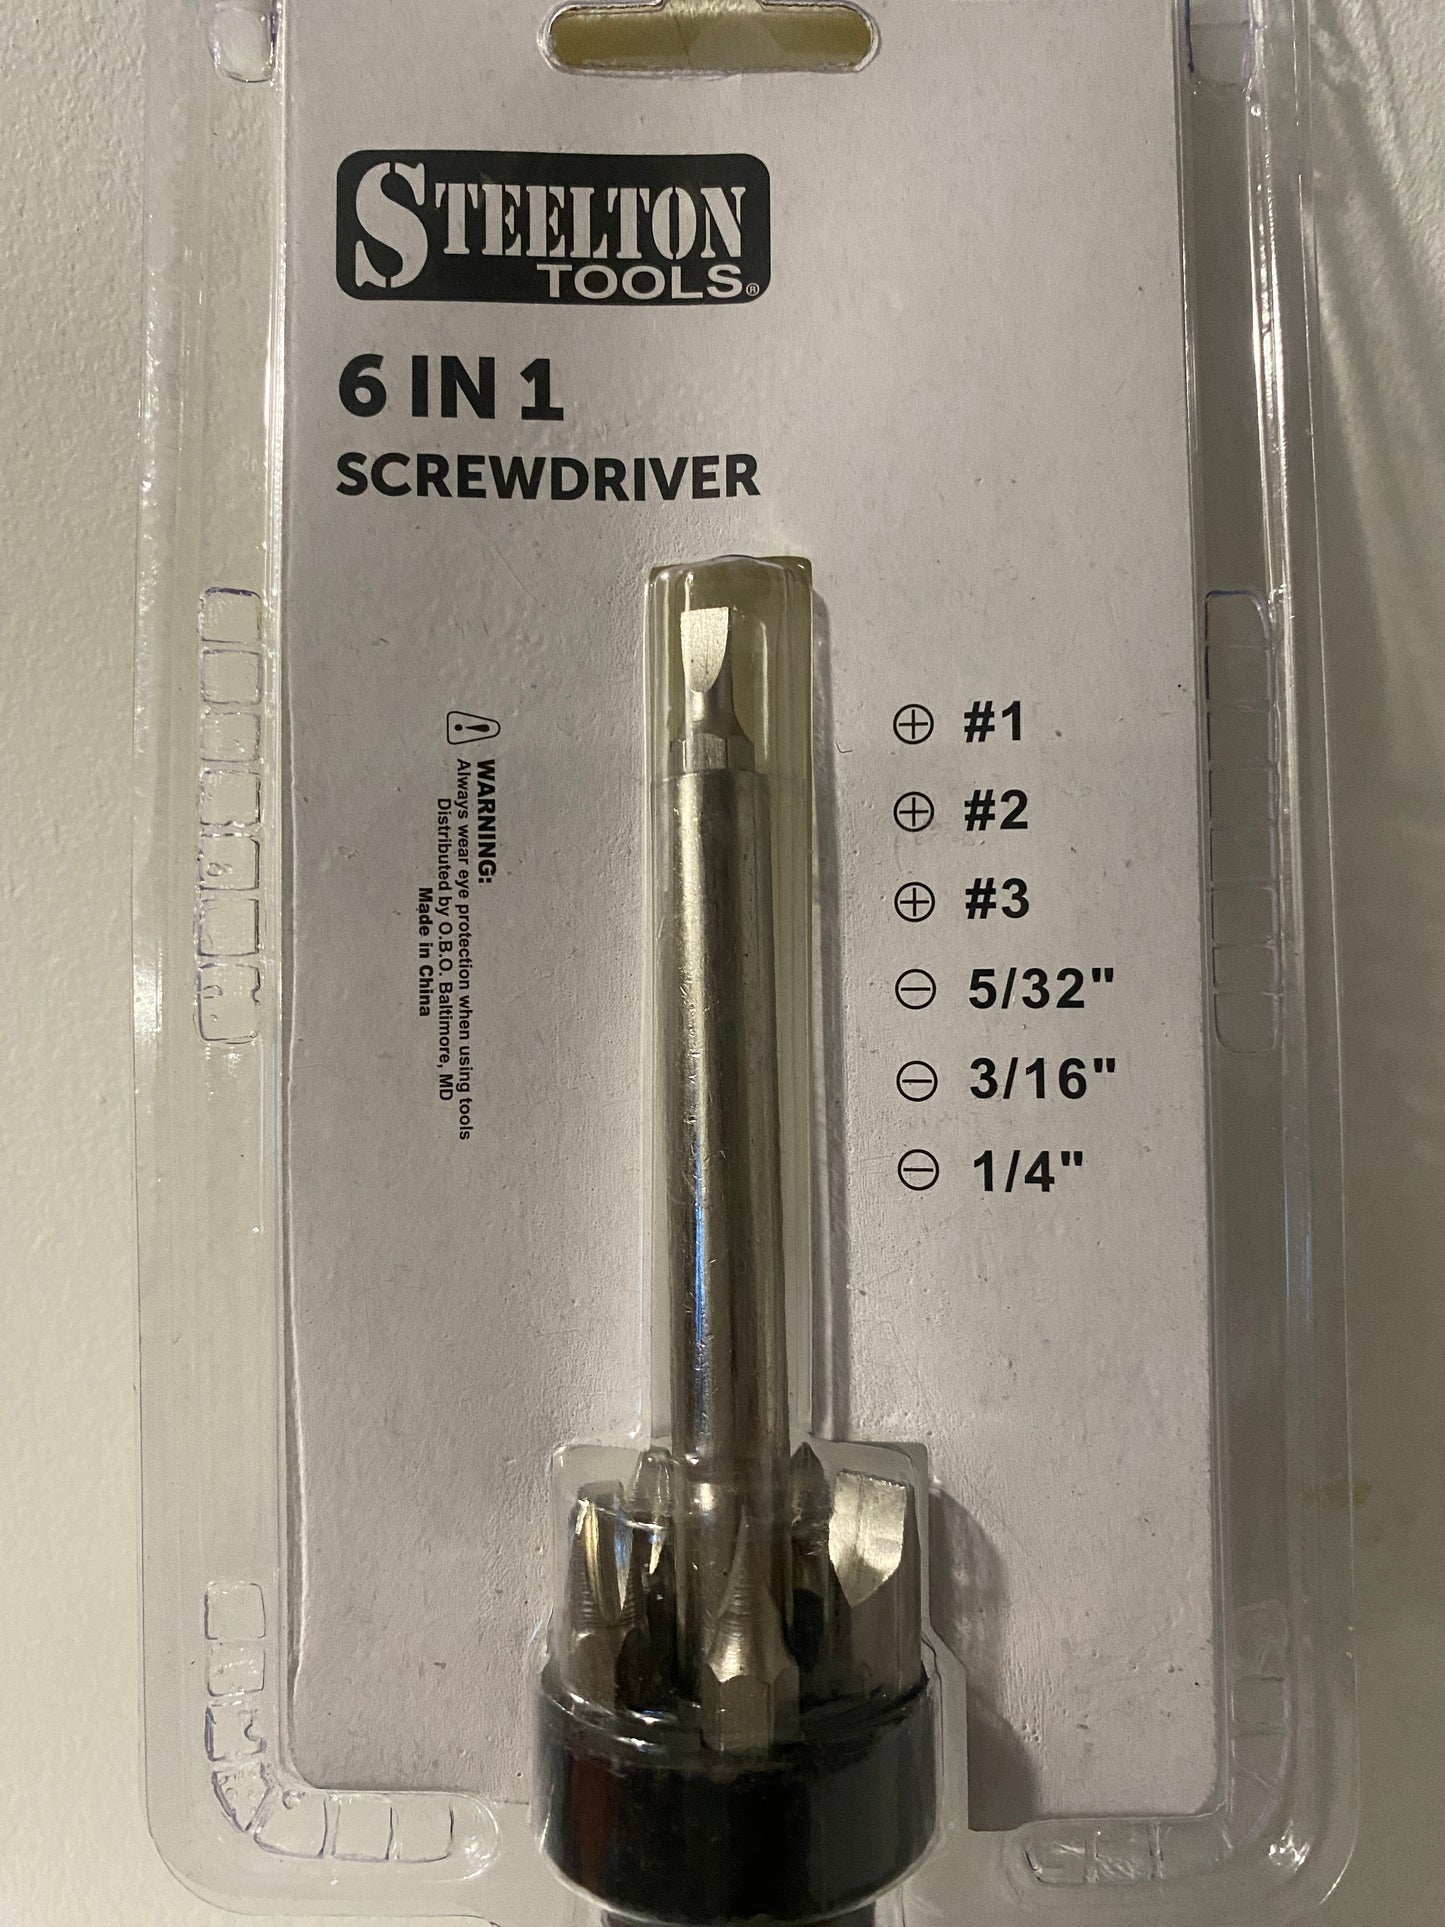 Steelton Tools Screwdriver 6 In 1